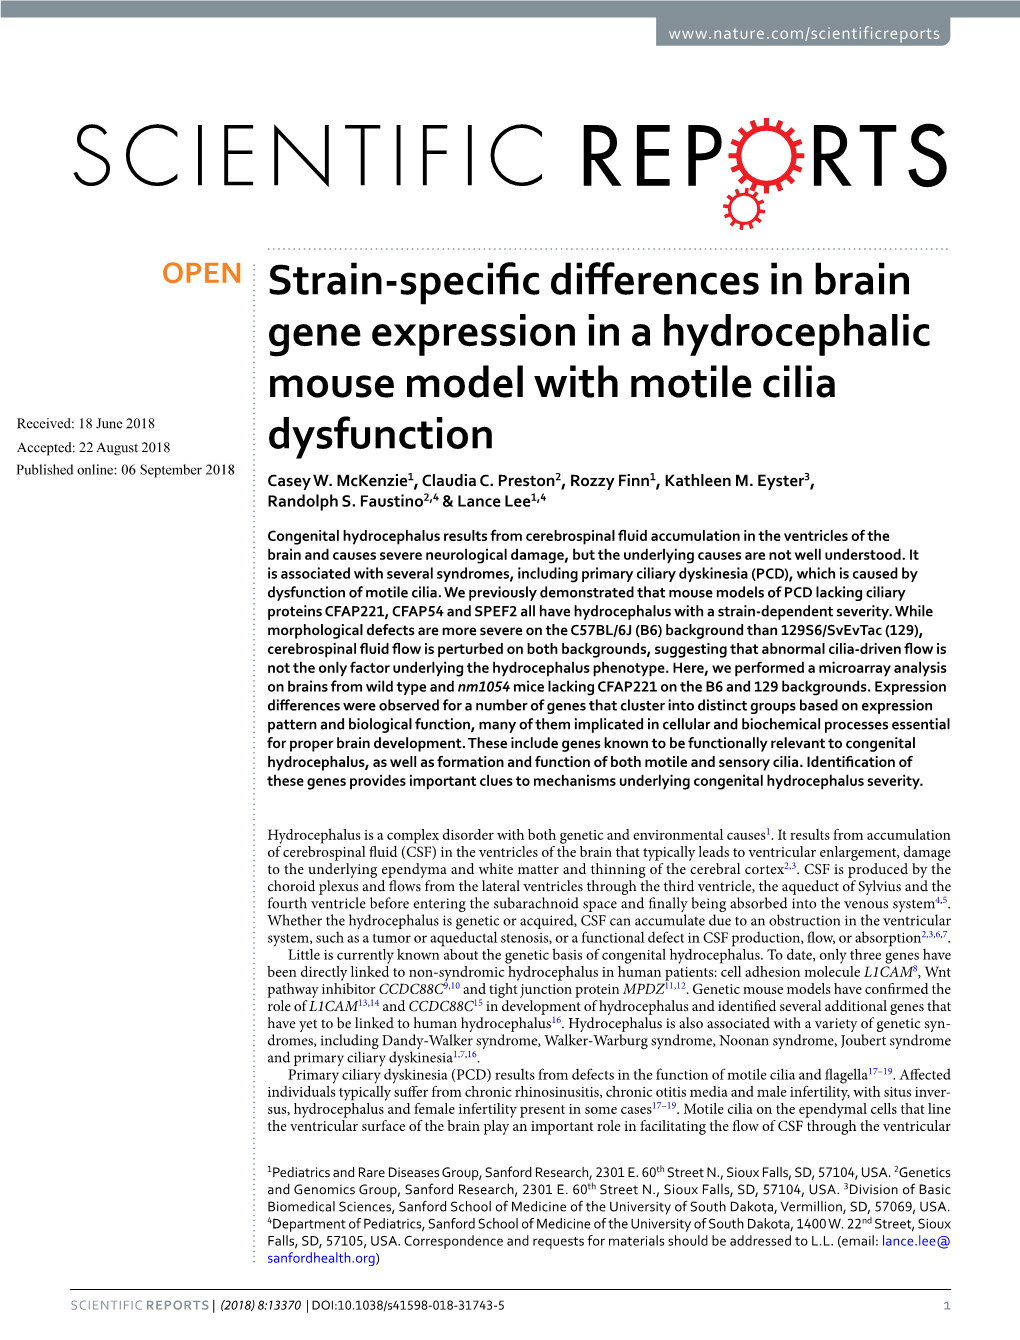 Strain-Specific Differences in Brain Gene Expression in a Hydrocephalic